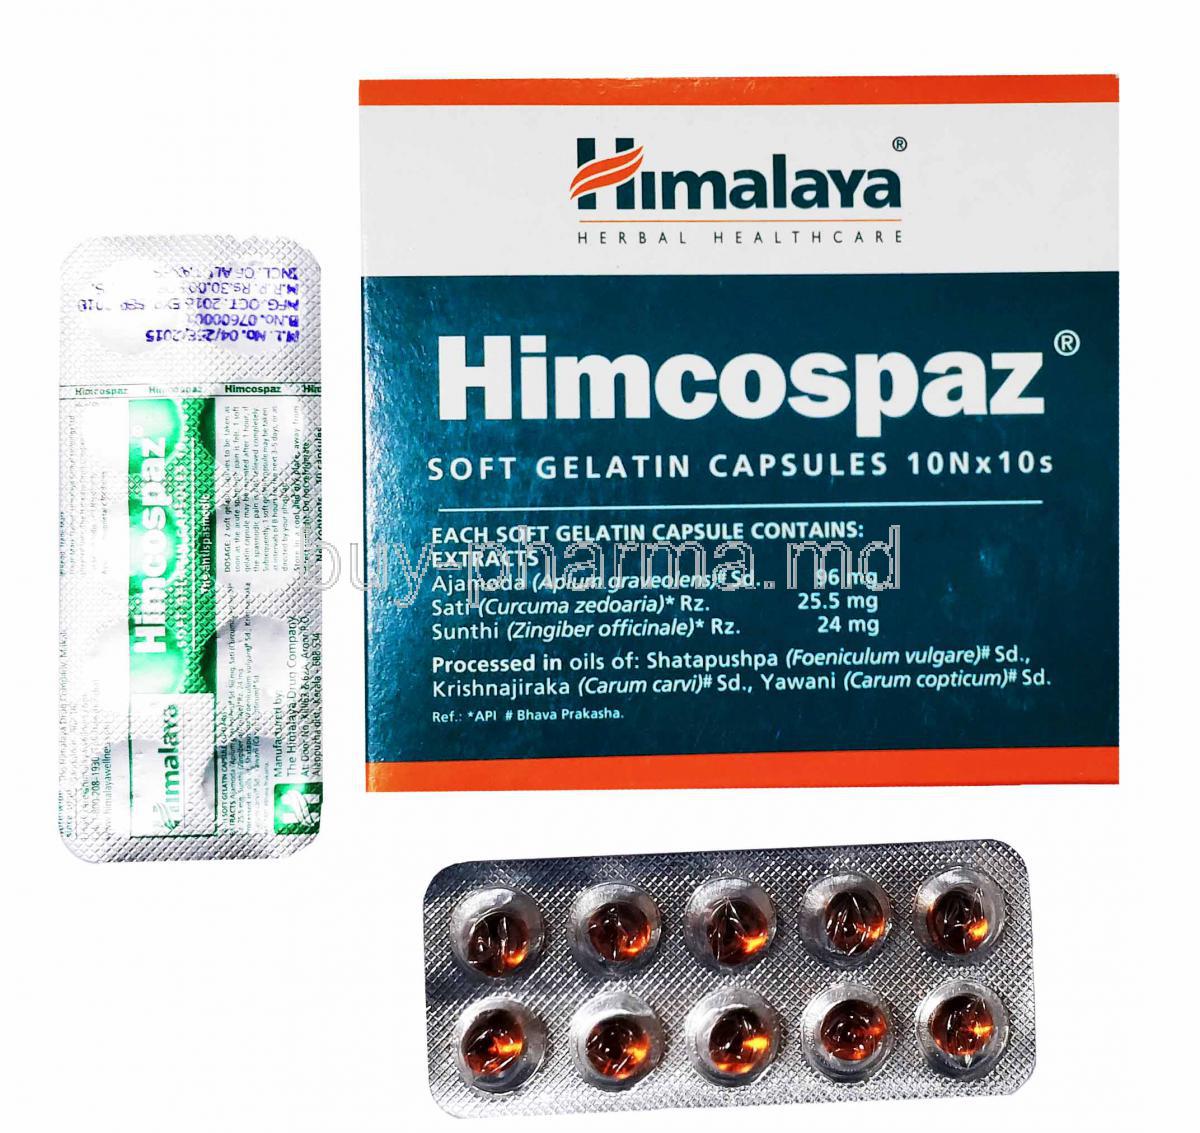 Himcospaz, Himalaya, soft gelatin capsules, box and blister pack presentation